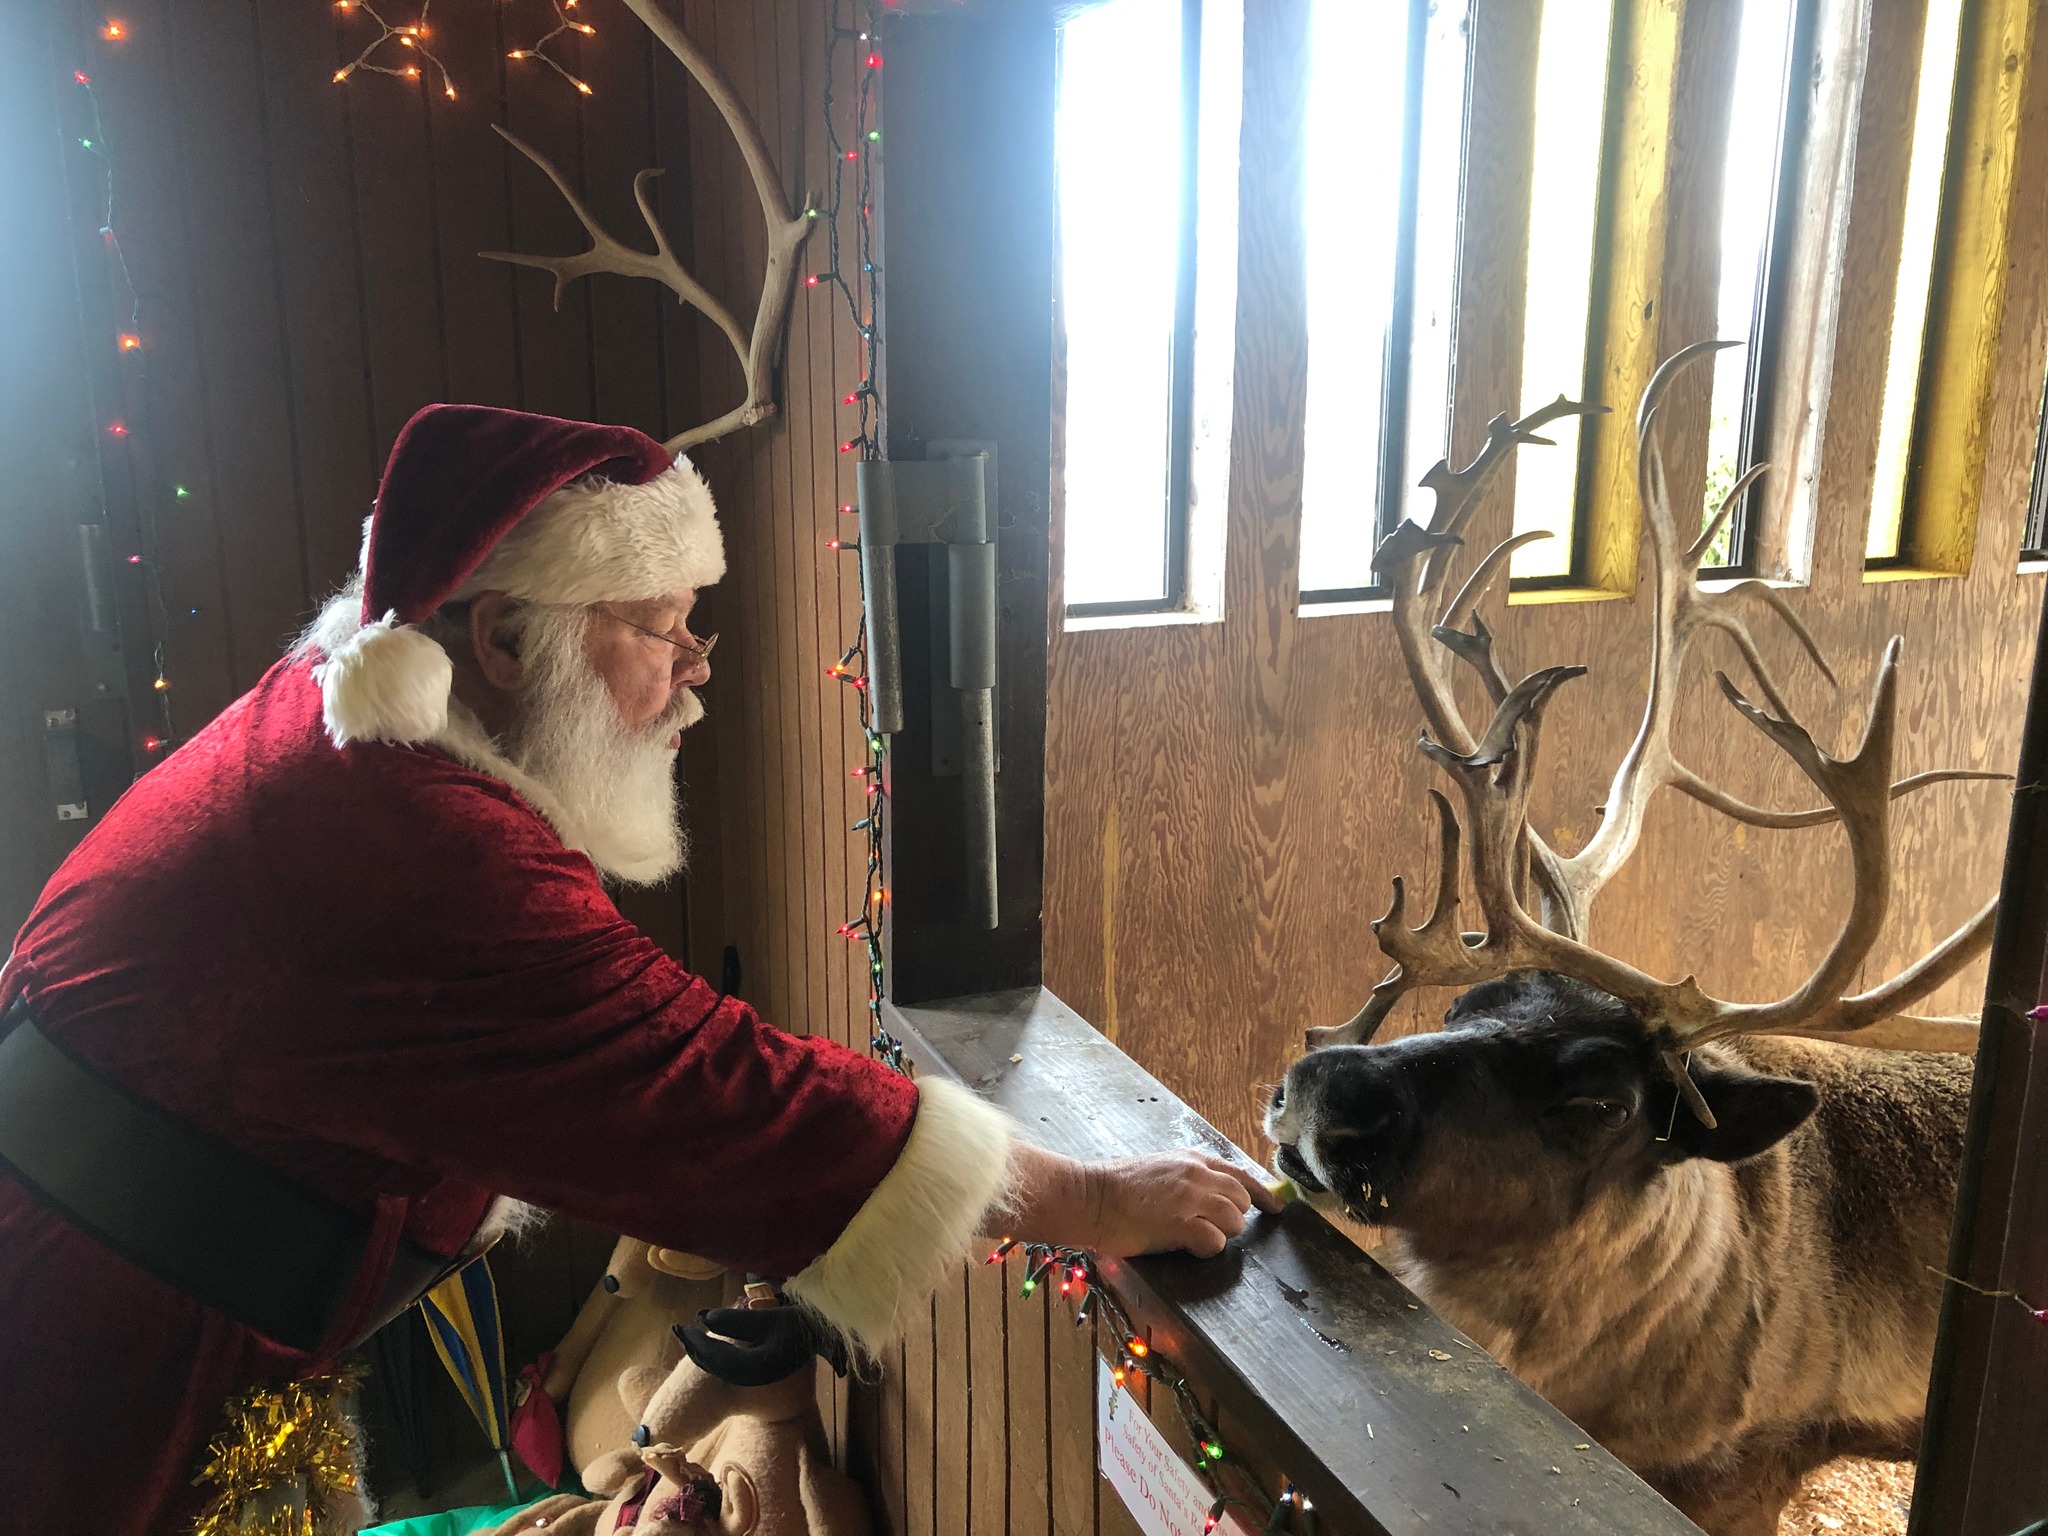 Santa and a reindeer